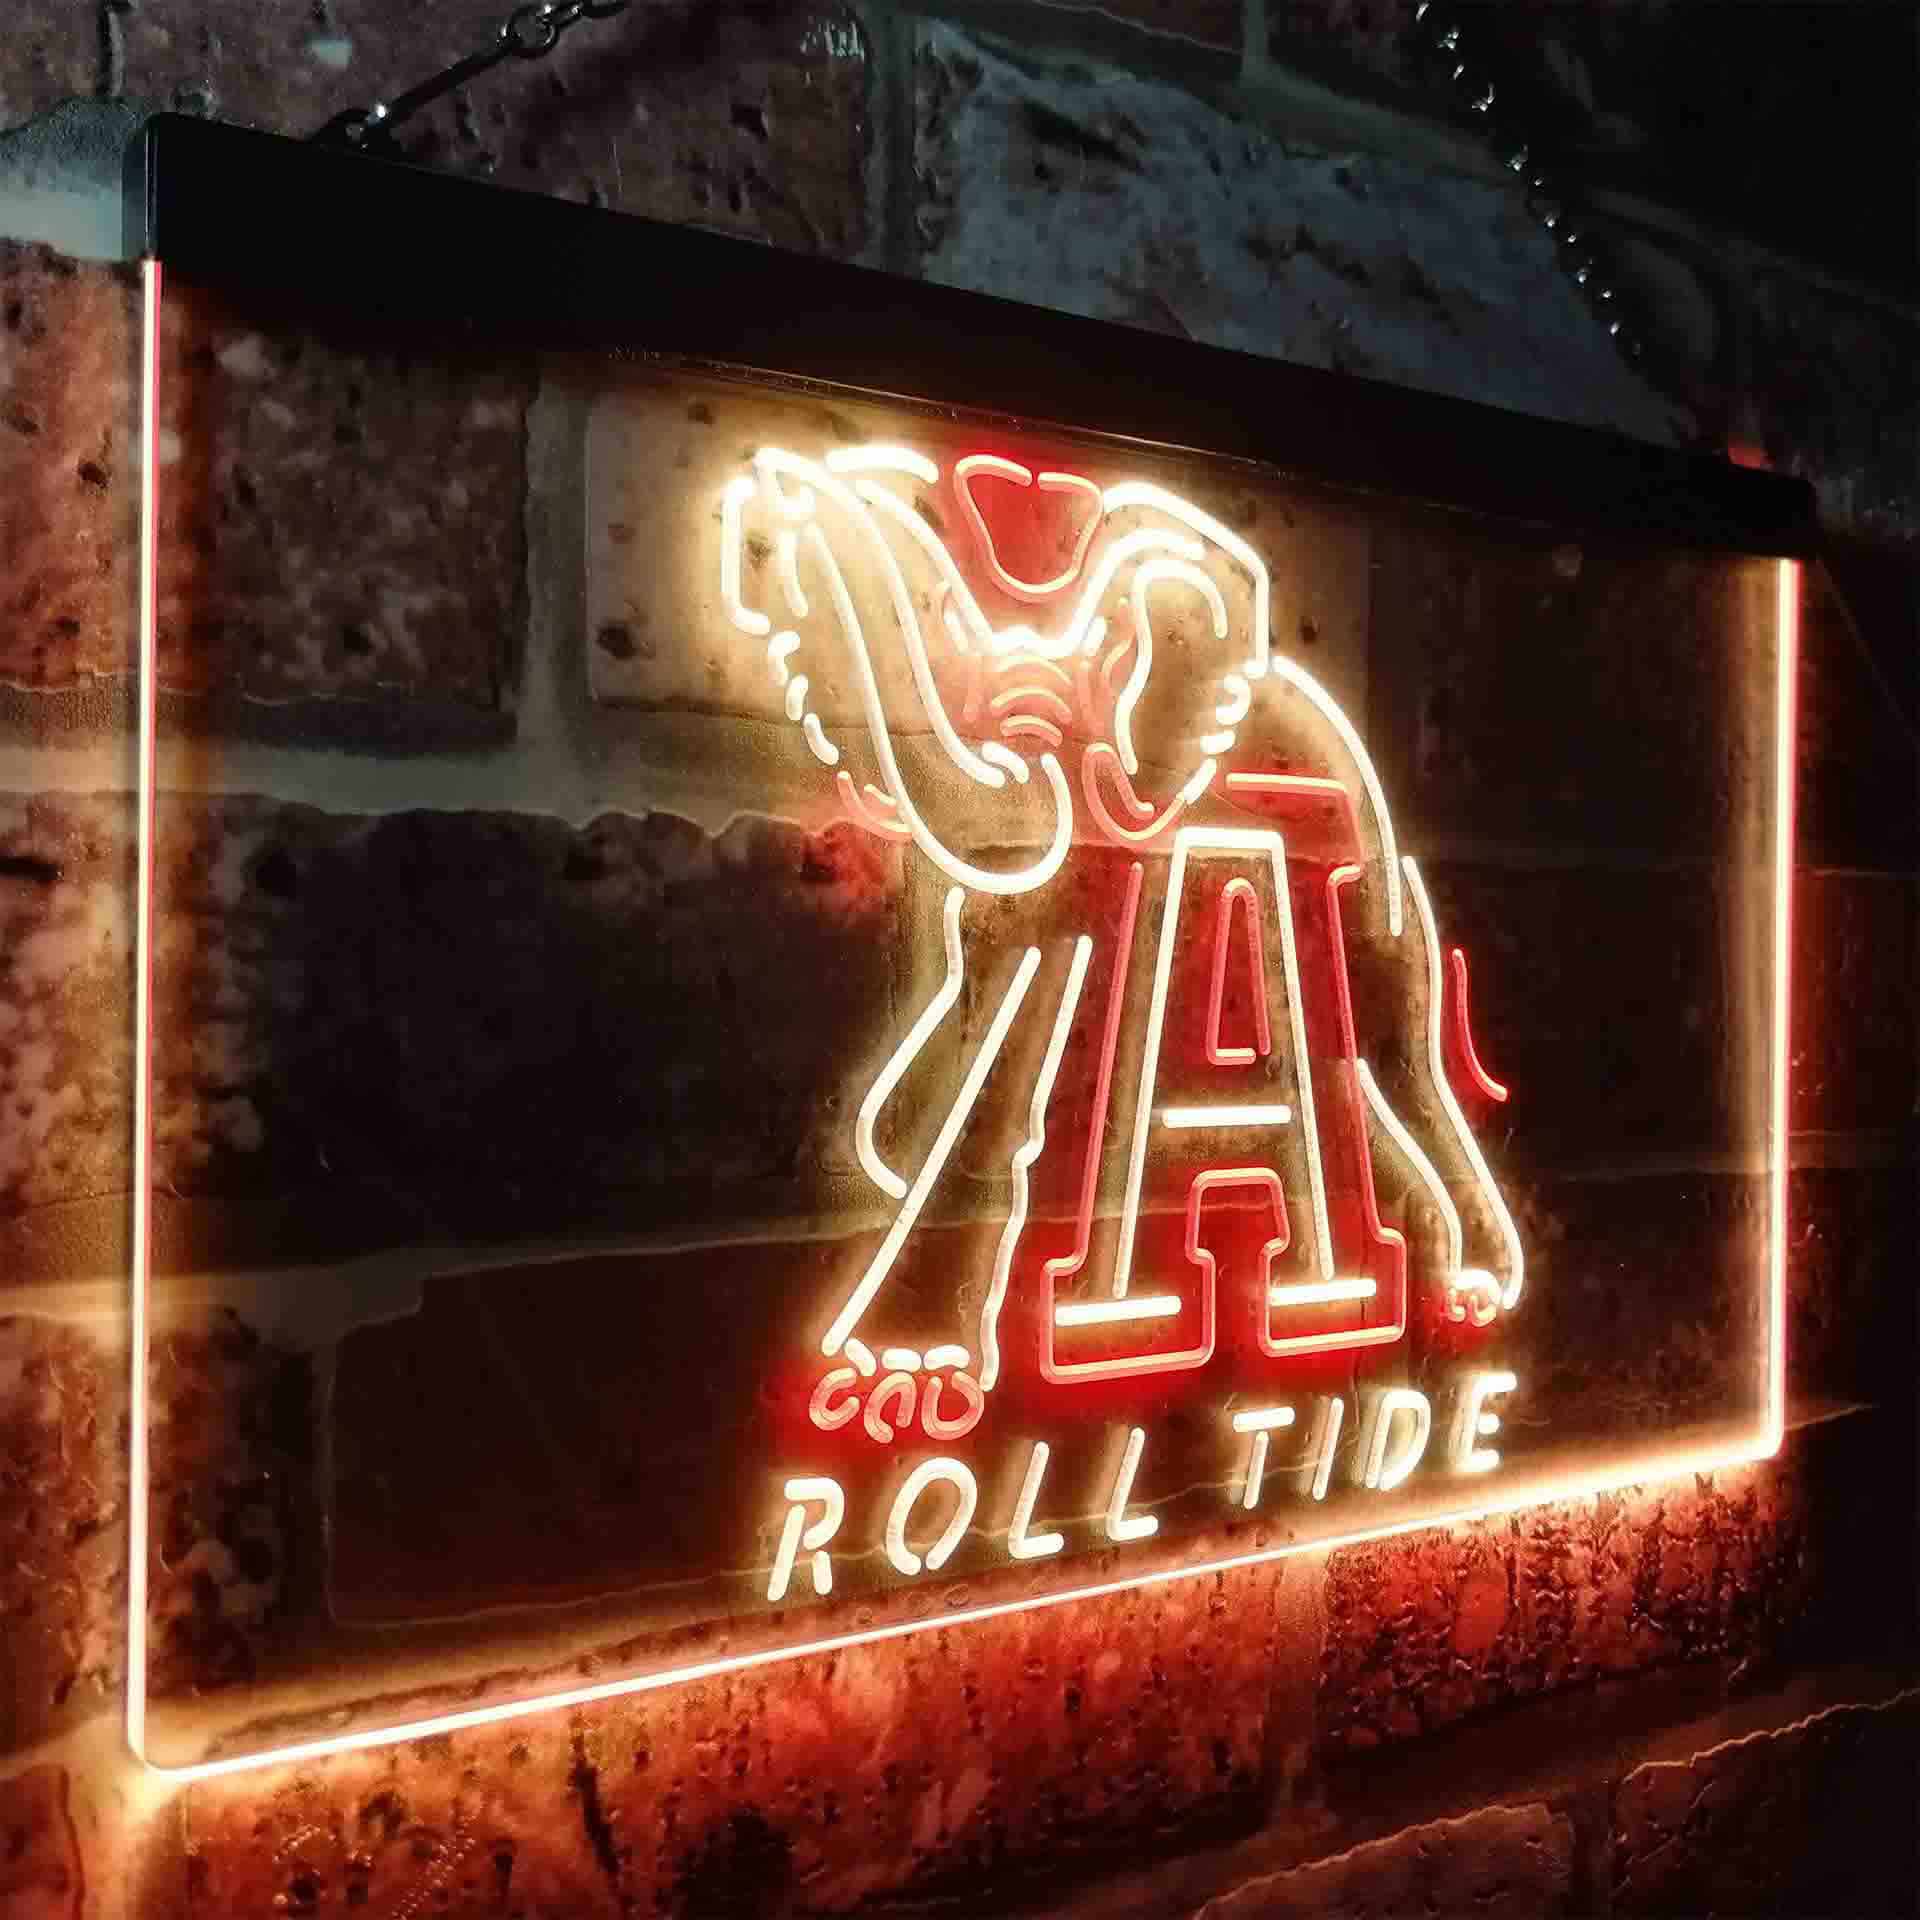 University of Alabama Roll Tide Club Neon Light Up Sign Wall Decor